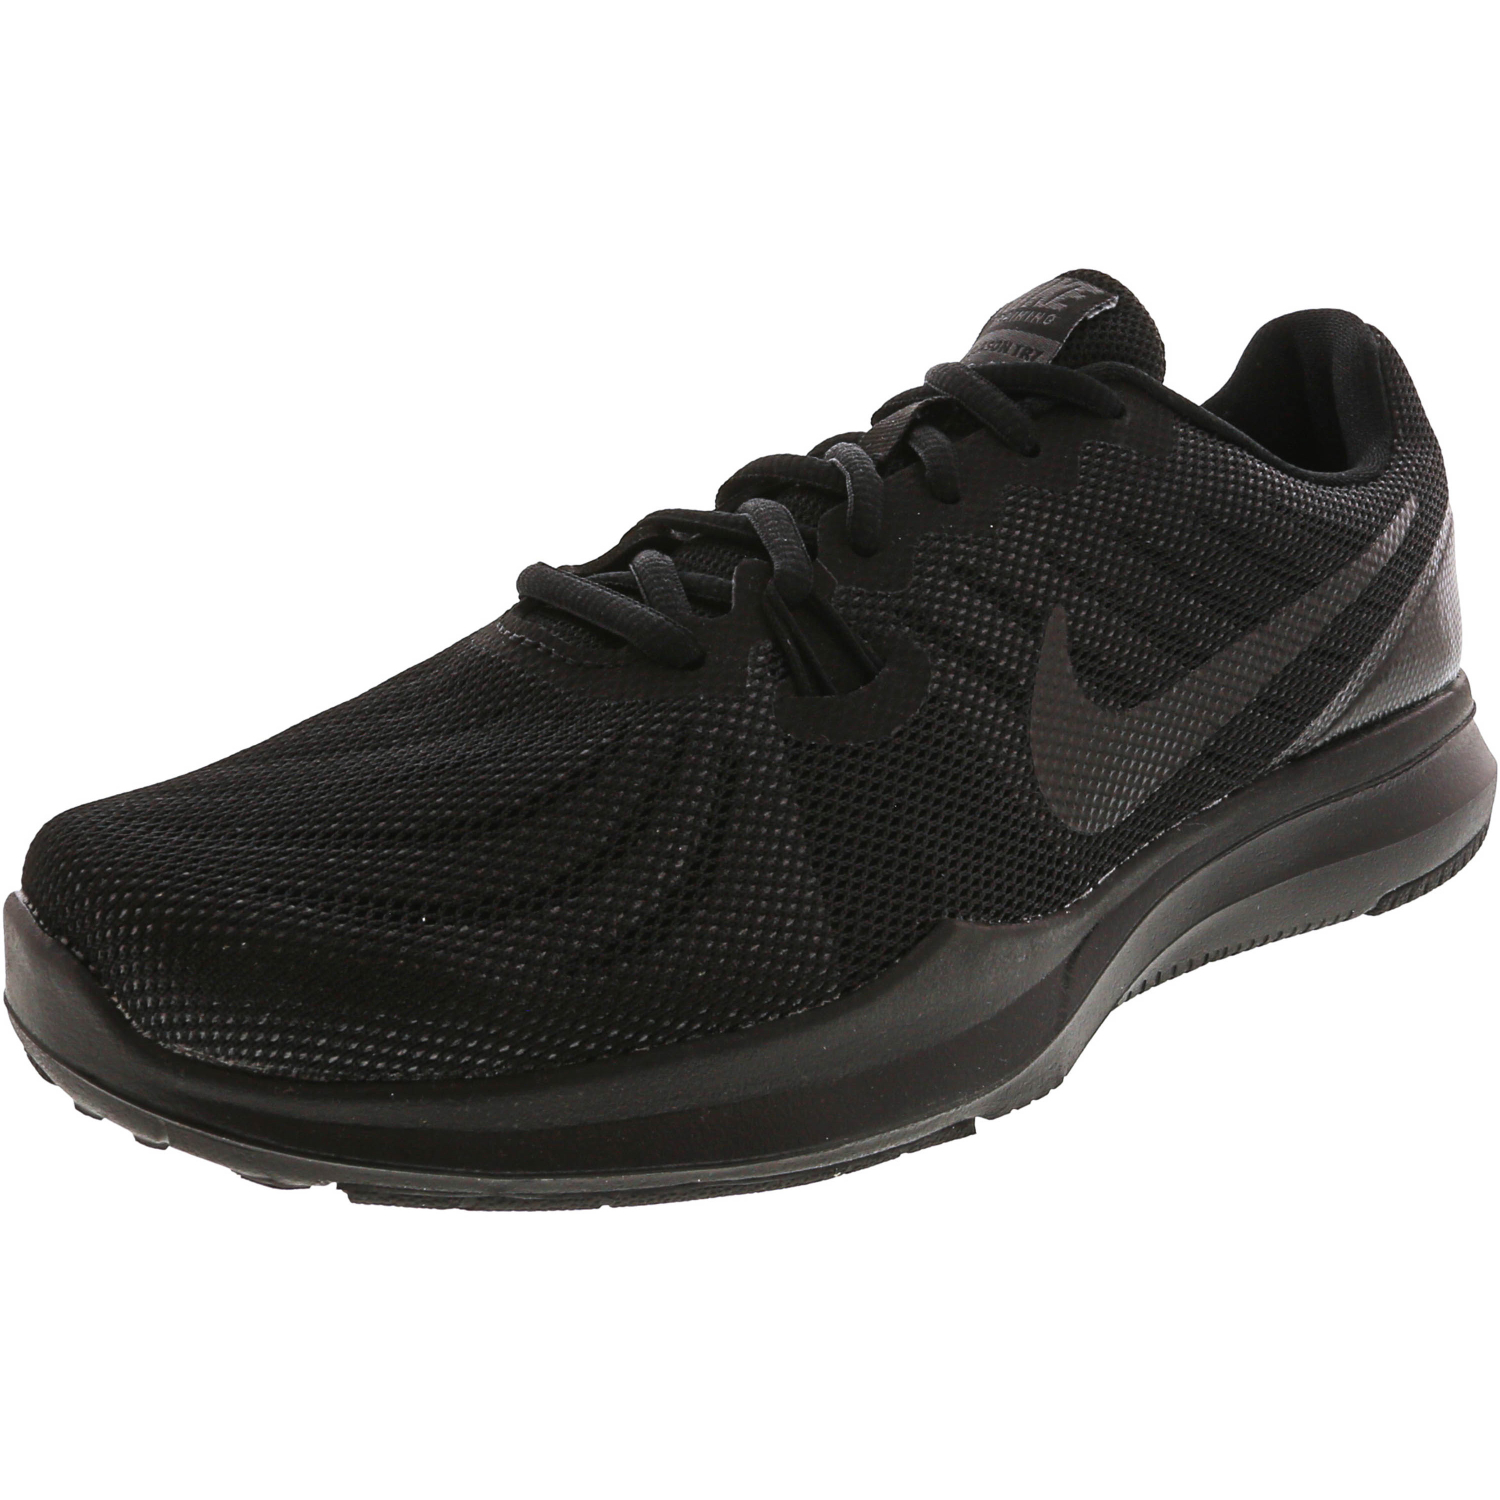 Nike in Season TR 7 Womens 7 W Wide Black Training Shoes 909009002 PM ...